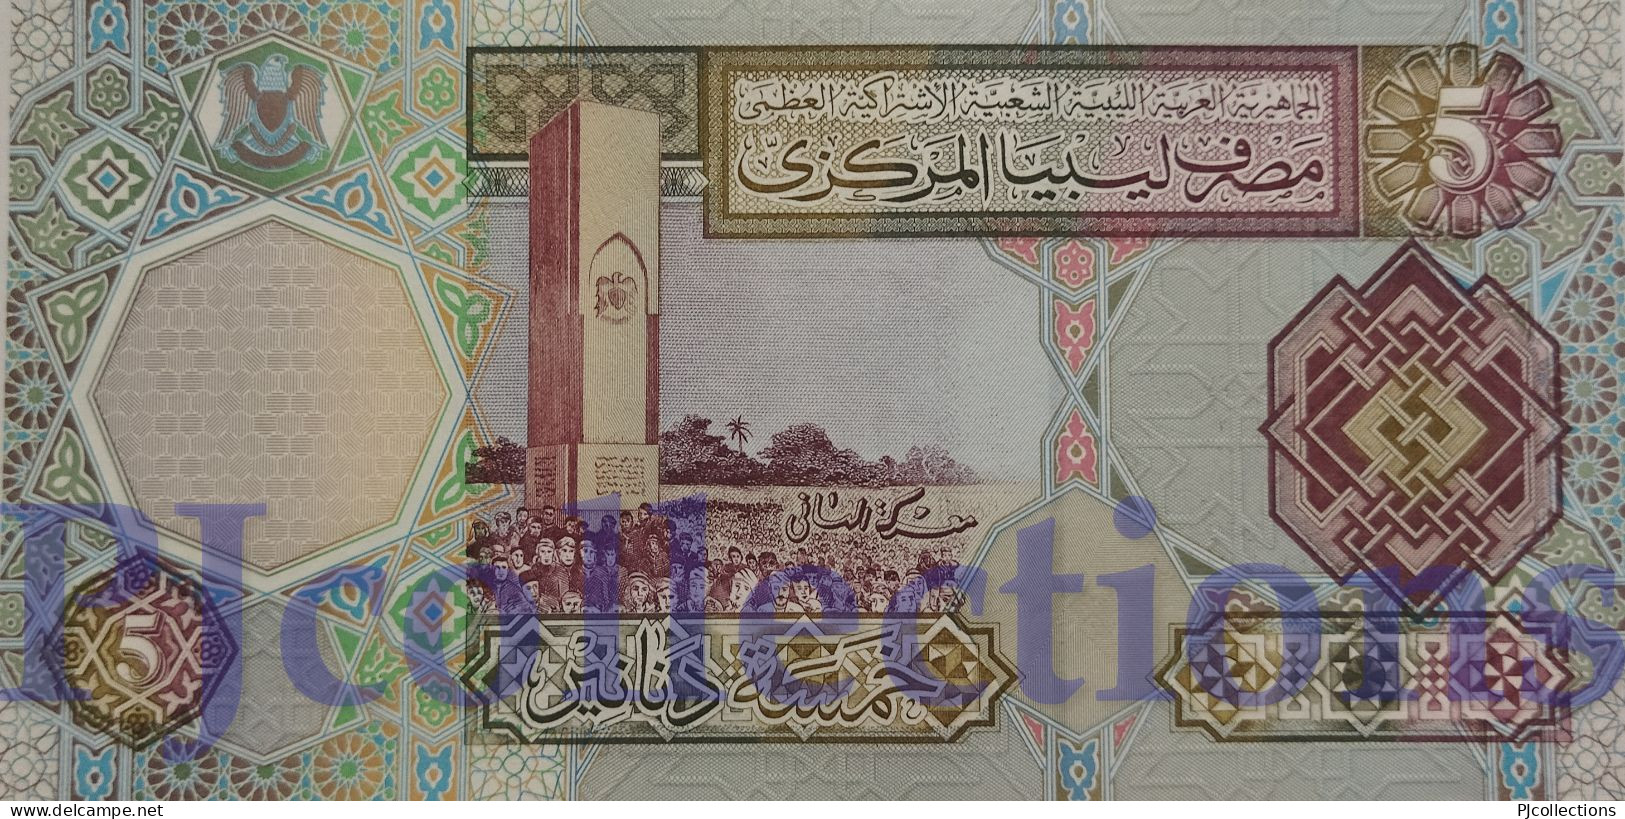 LIBYA 5 DINARS 2002 PICK 65a UNC - Libya